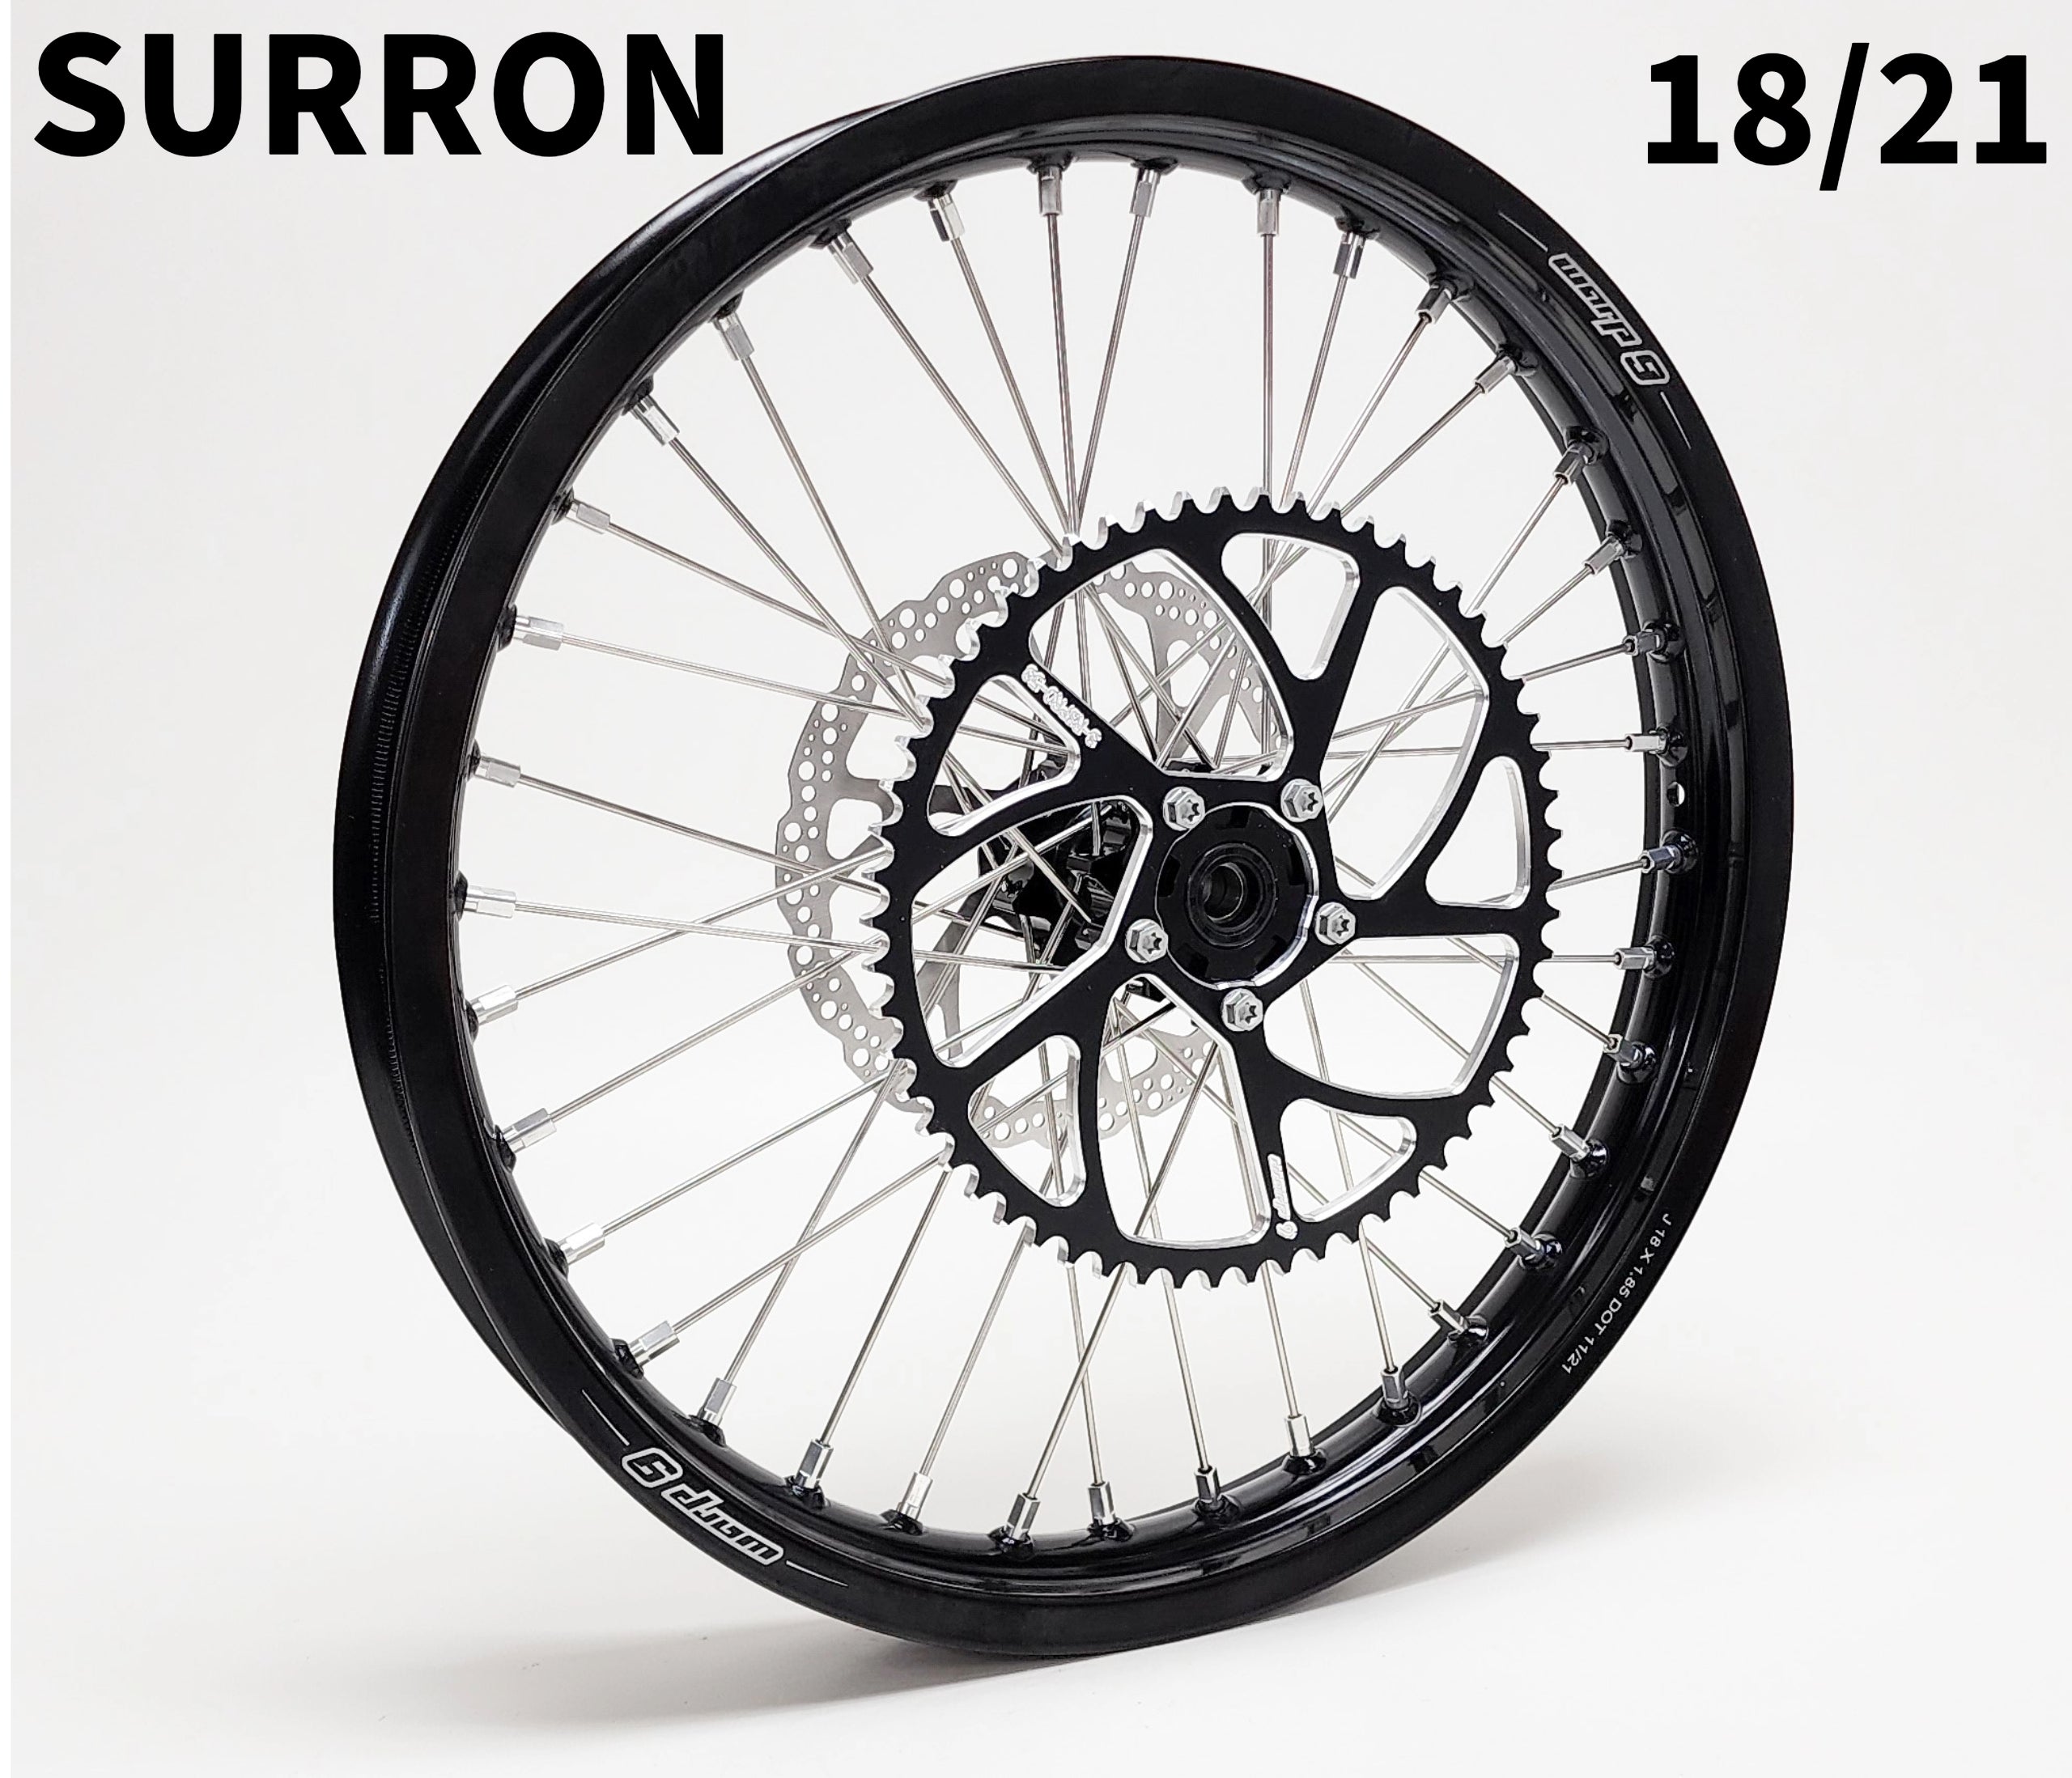 Warp 9 Complete 18/21in Upgraded wheel Set for Surron light bee, E-ride Pro, 79 bike